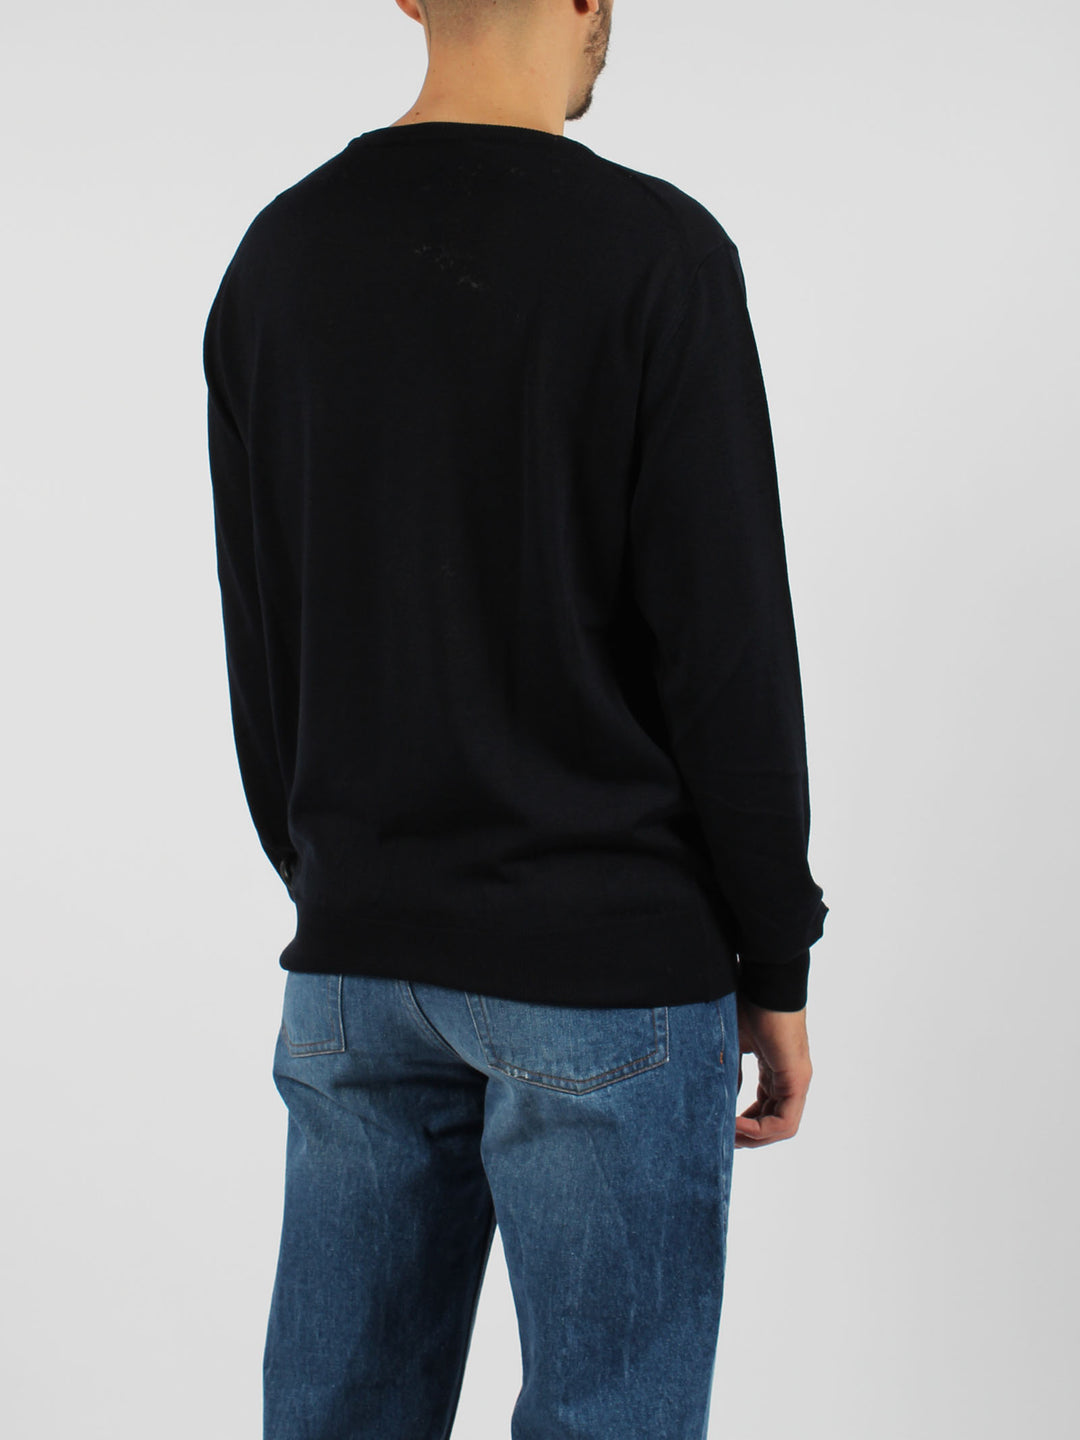 Wool blend crewneck sweater